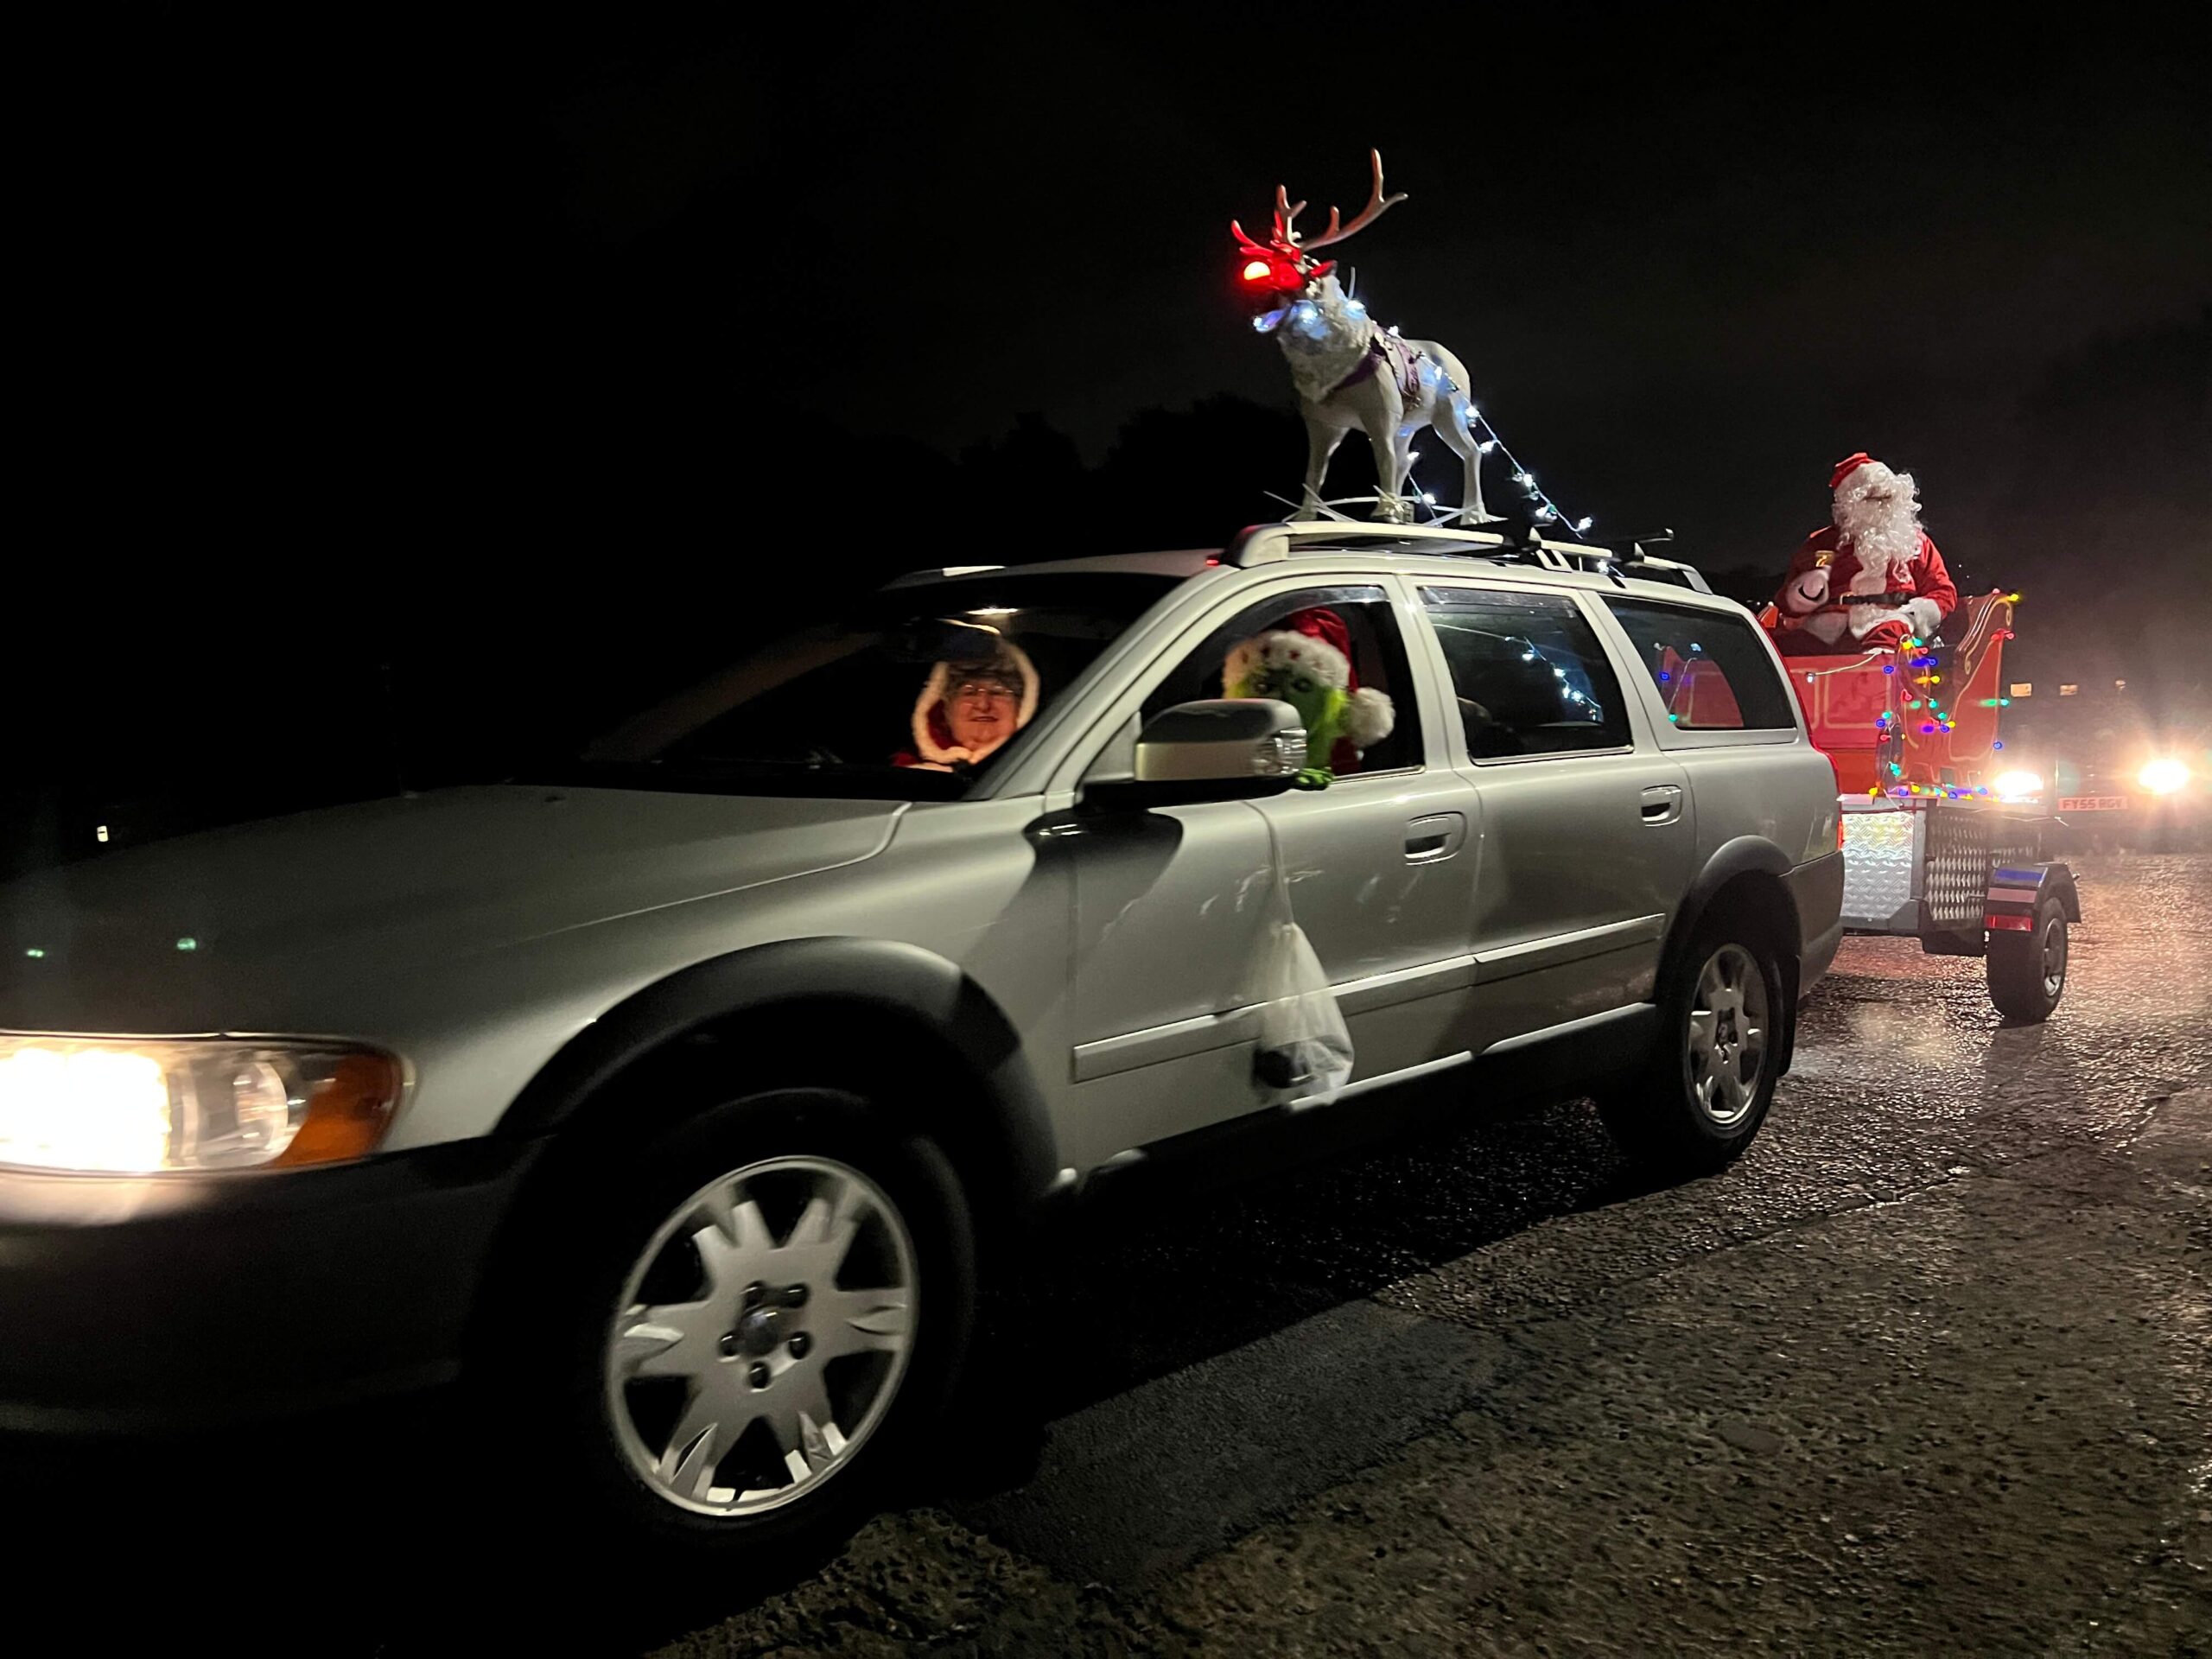 Santa being towed on a sleigh behind a car